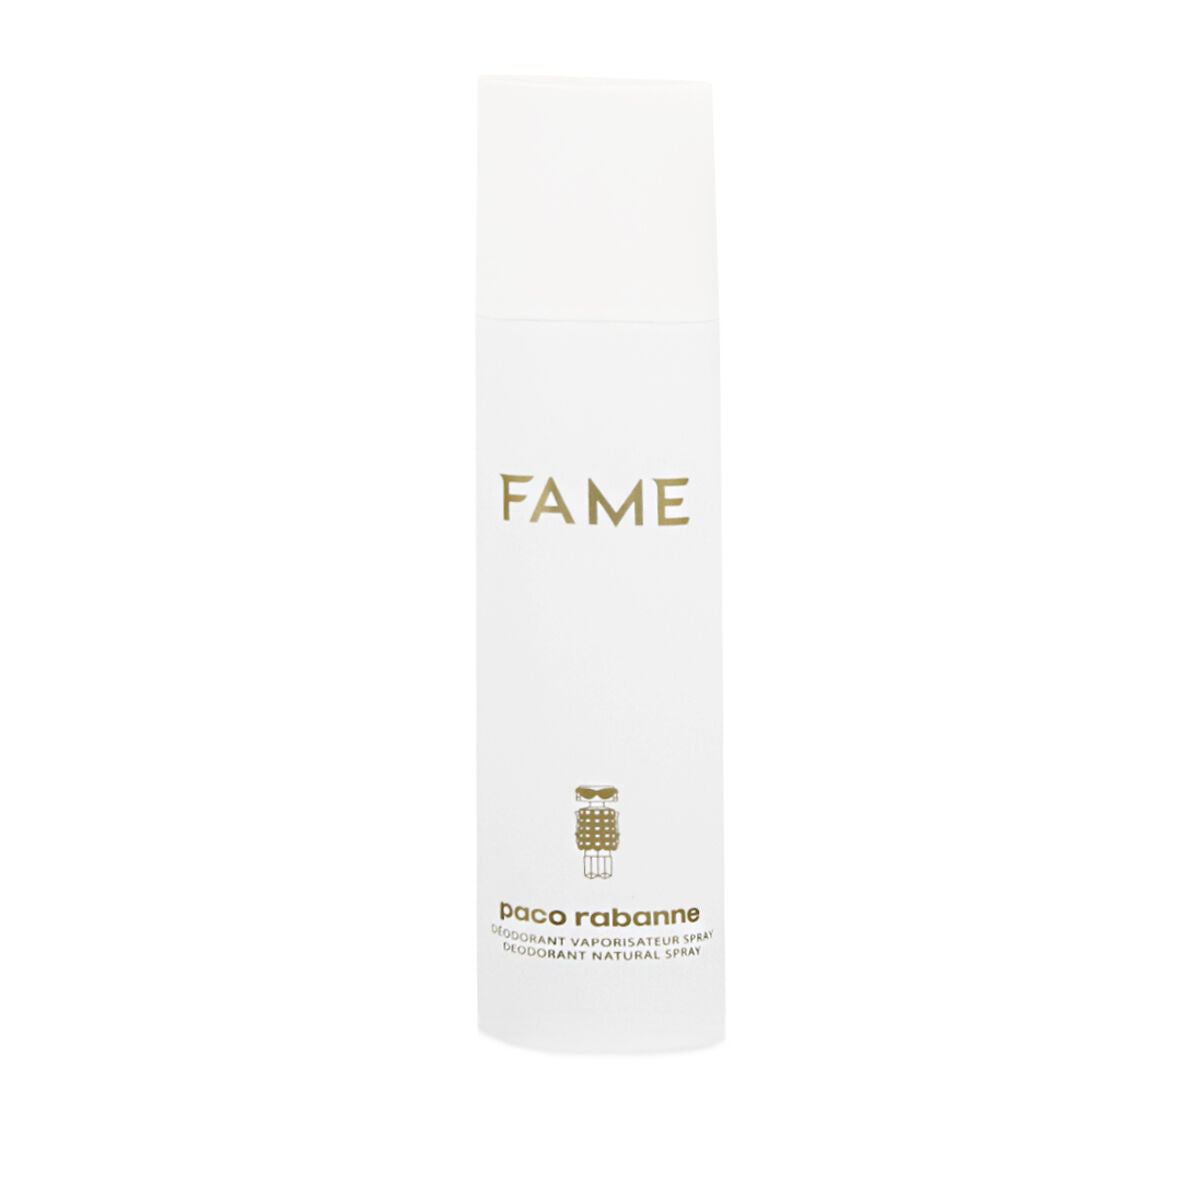 Spray Deodorant Paco Rabanne Fame 150 ml-0